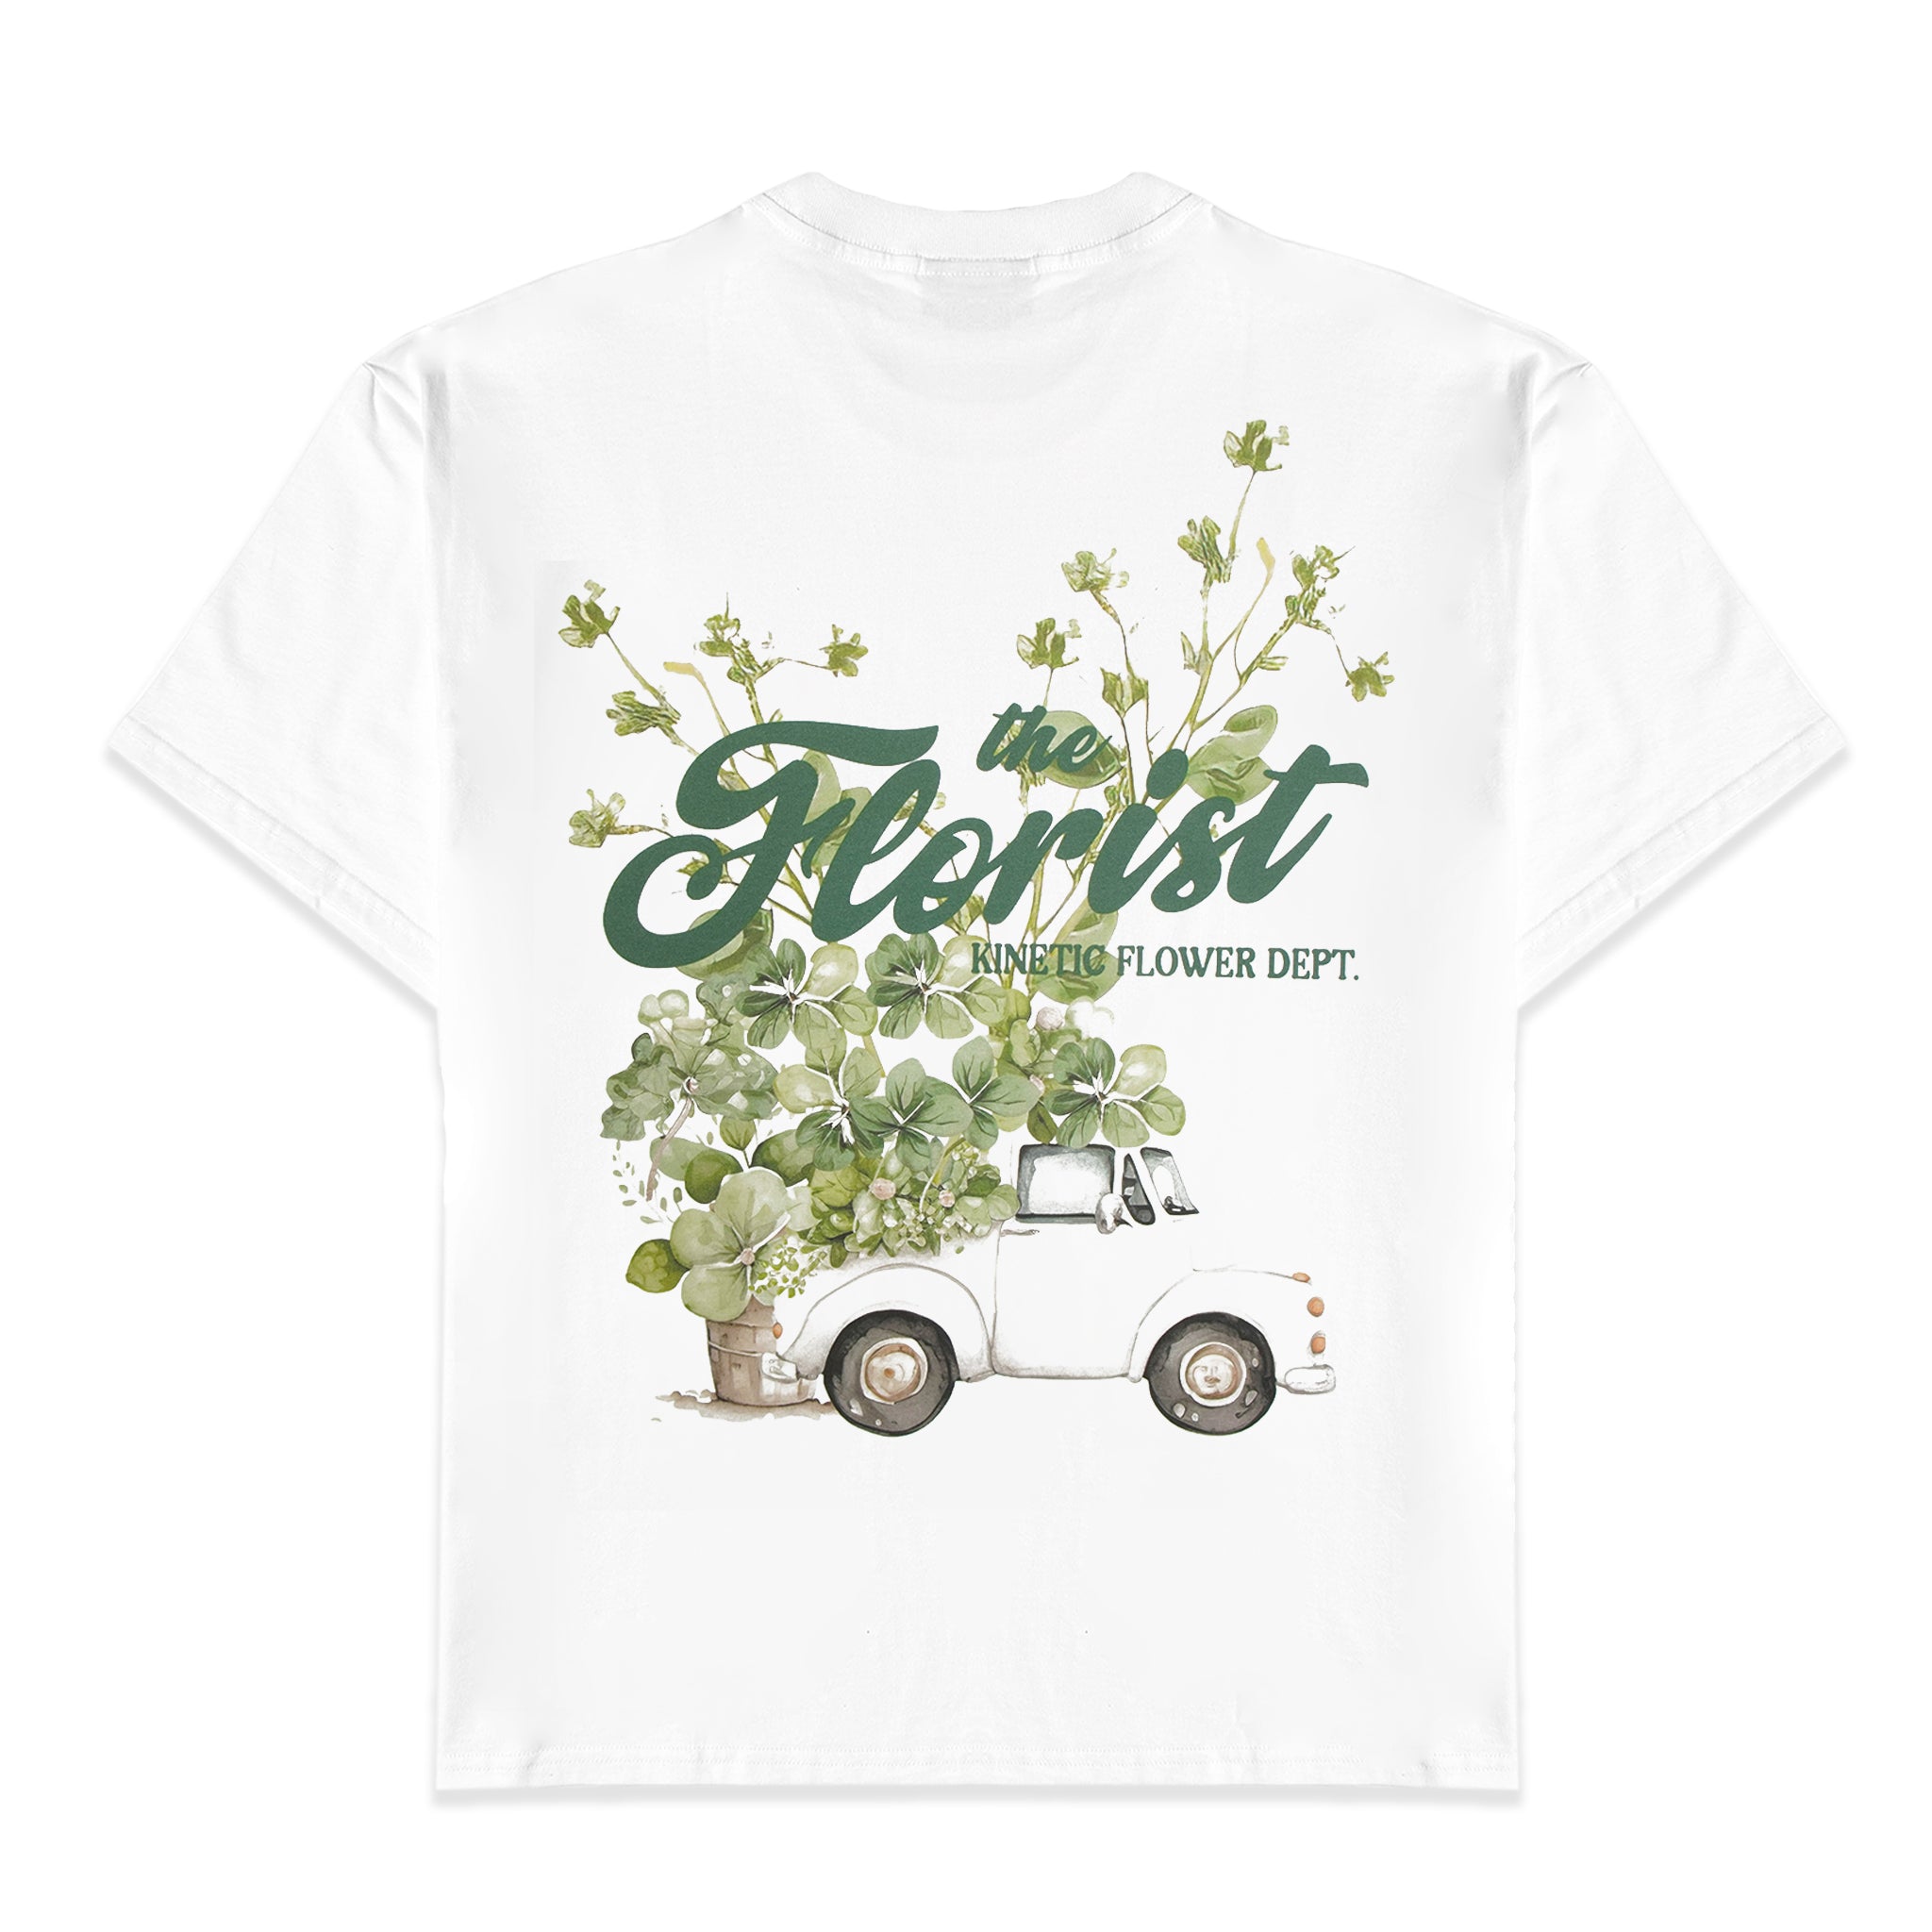 The Florist Earth Oversized Shirt